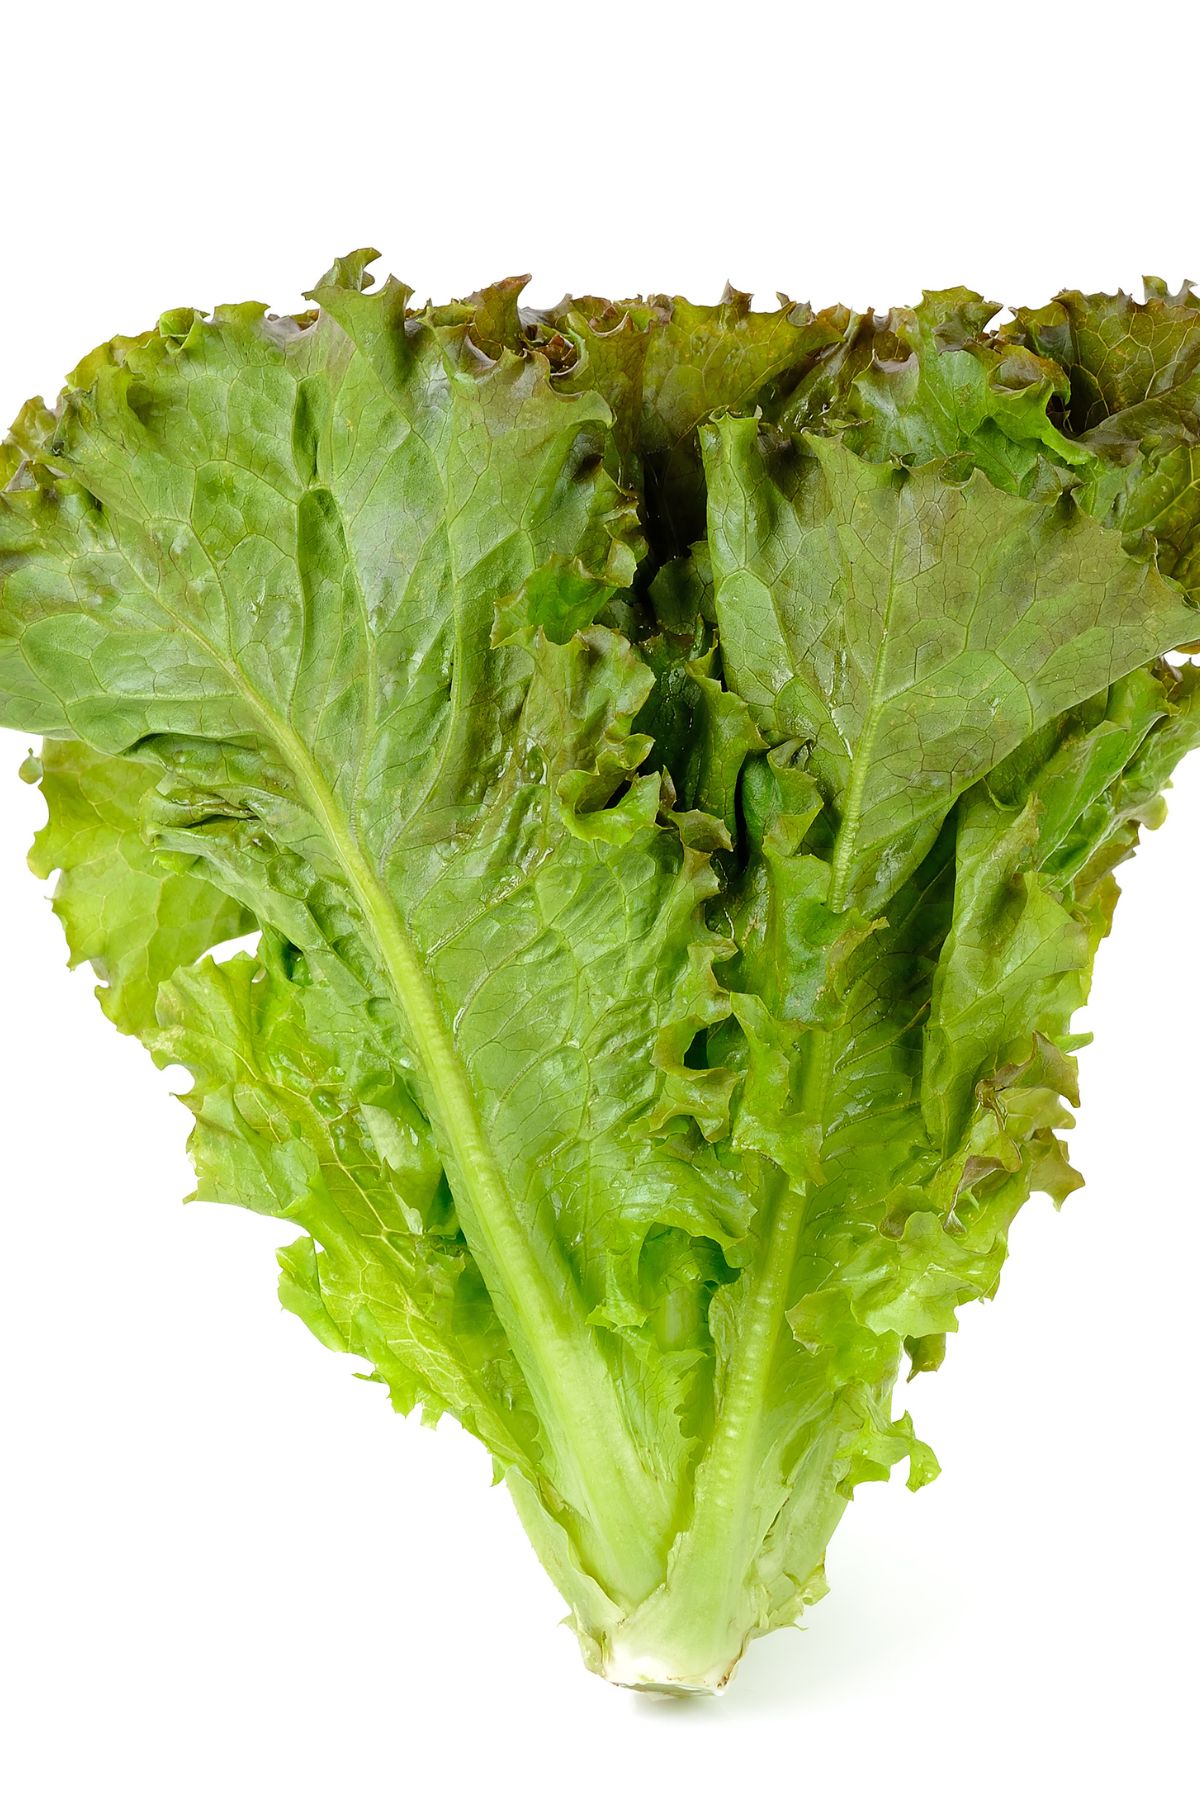 leaf lettuce on a white background.